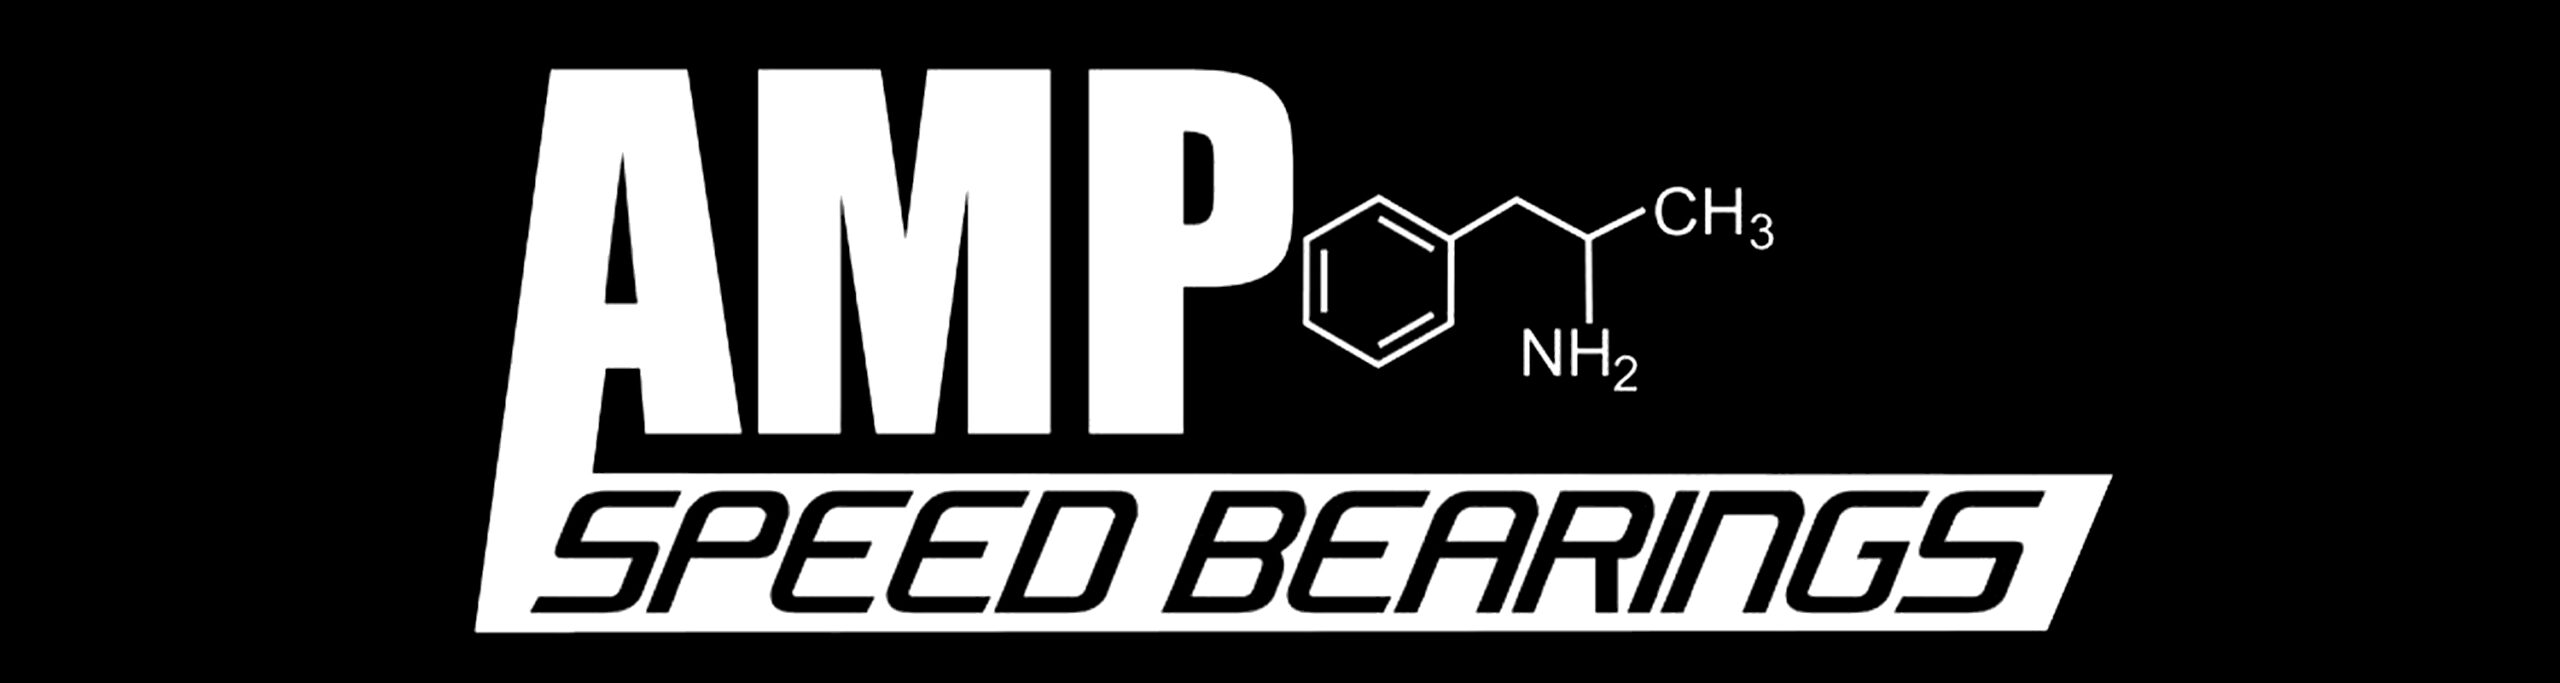 Amphetamine Longboard & Skateboard Bearings